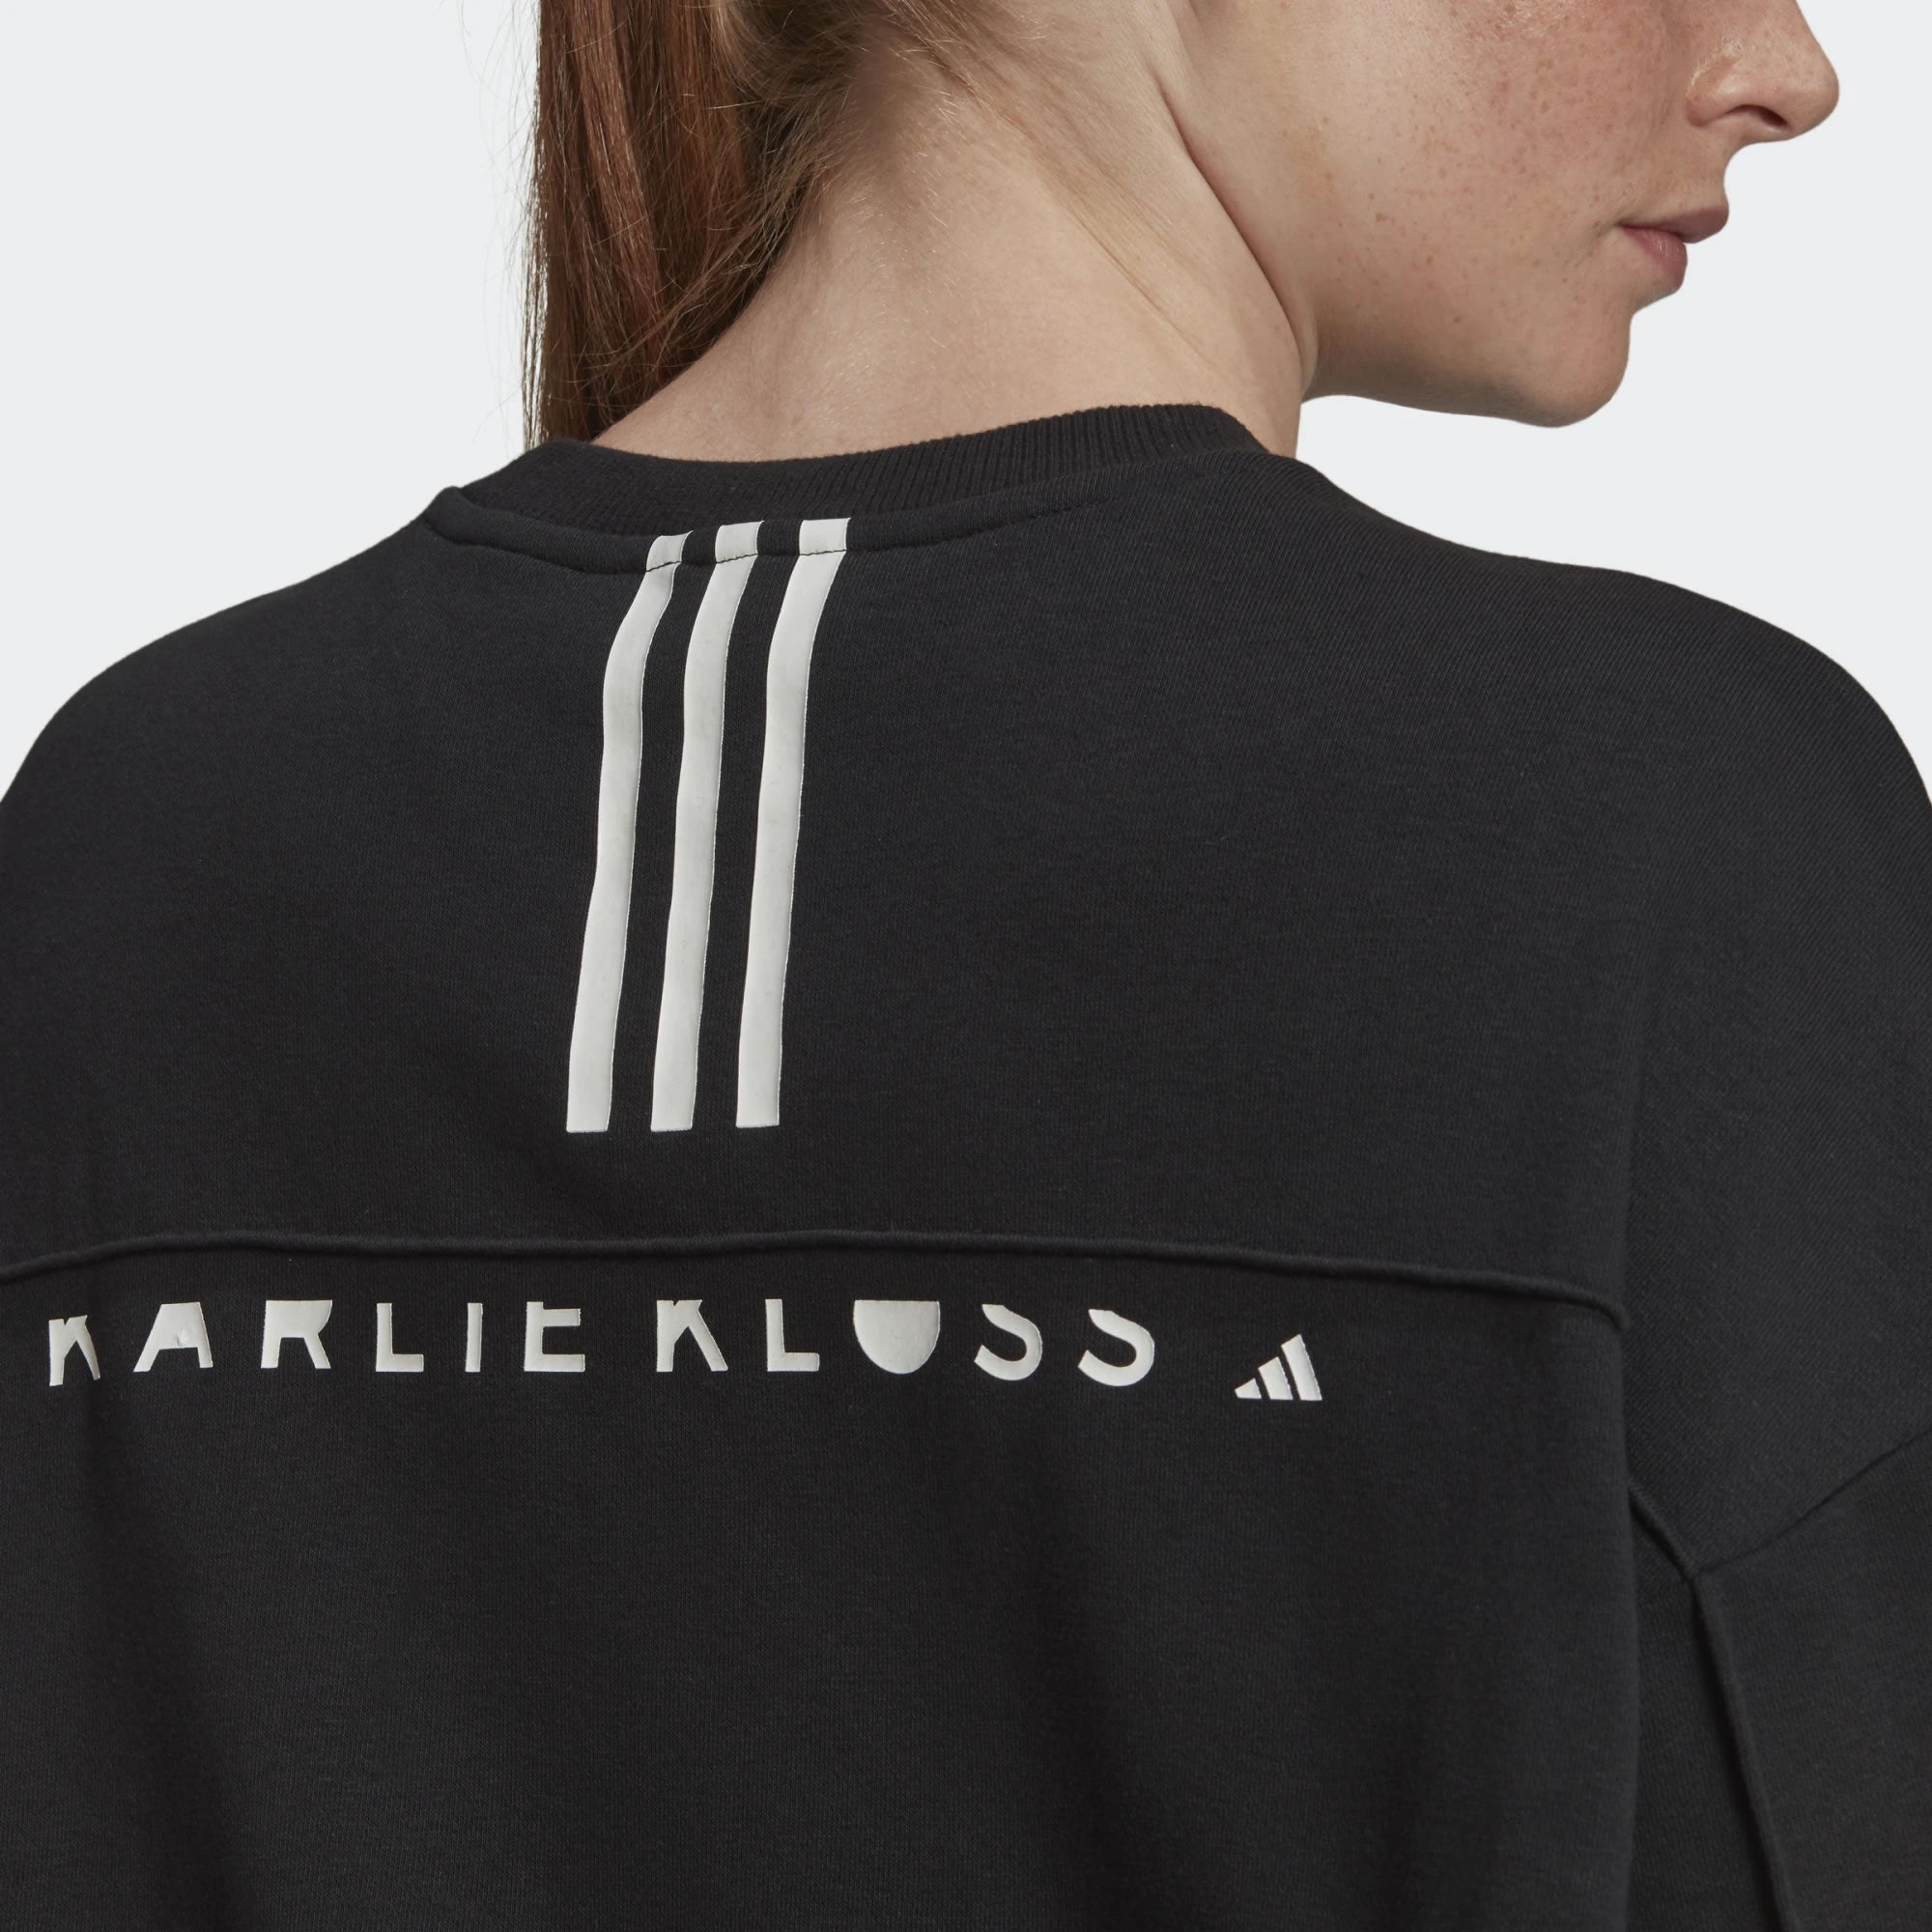 tradesports.co.uk Adidas Women's Karlie Kloss Crew Sweatshirt - Black